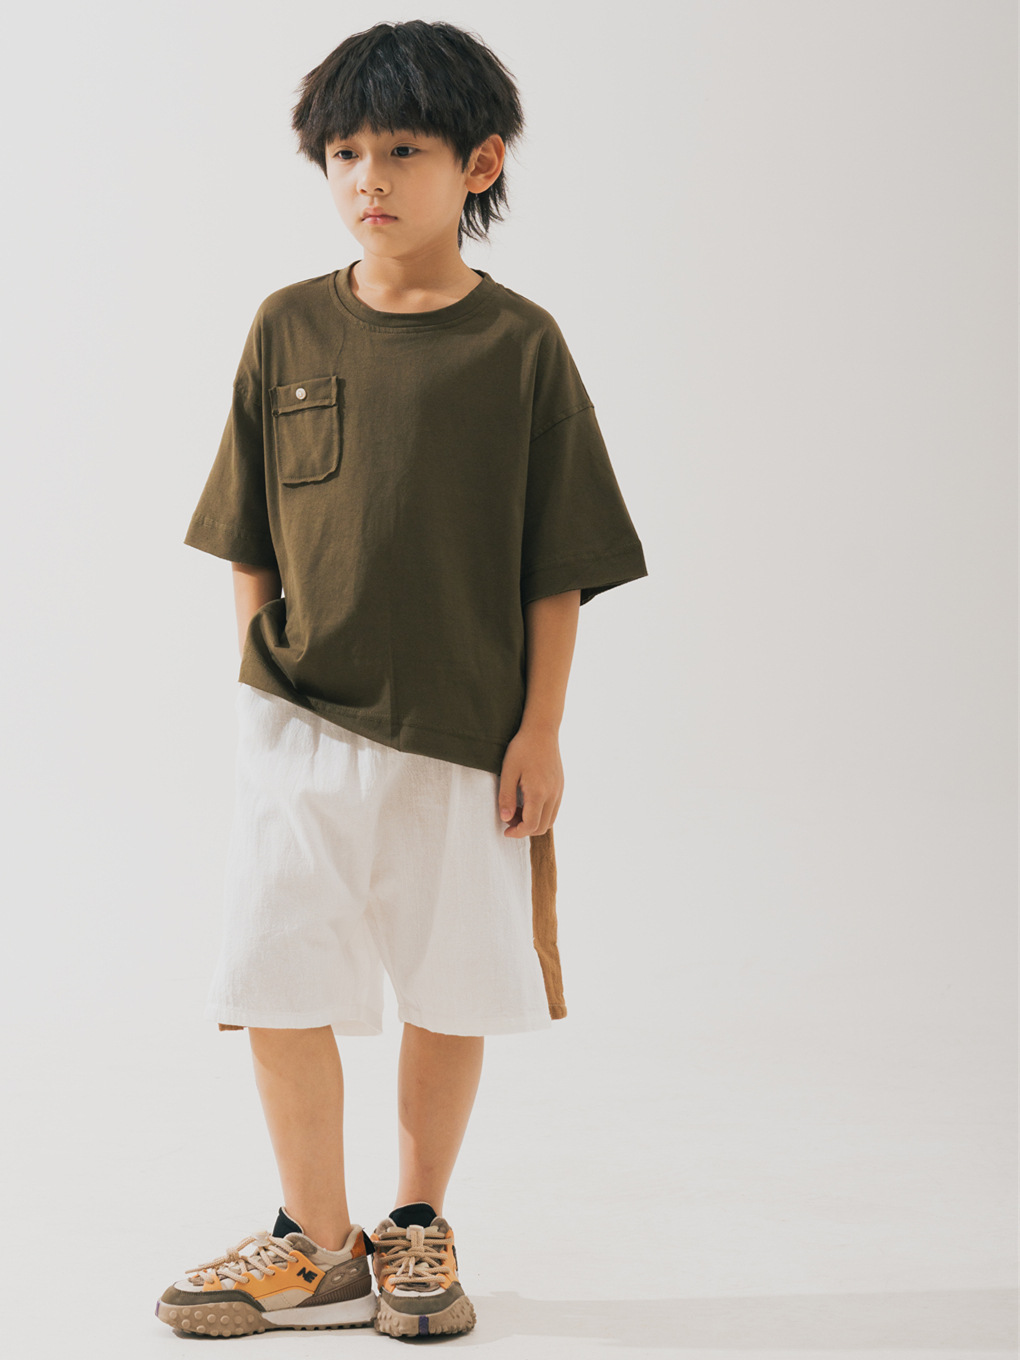 ins夏人気   韓国風子供服    半袖   Tシャツ  トップス   男の子    ファッション  3色【120-160cm】